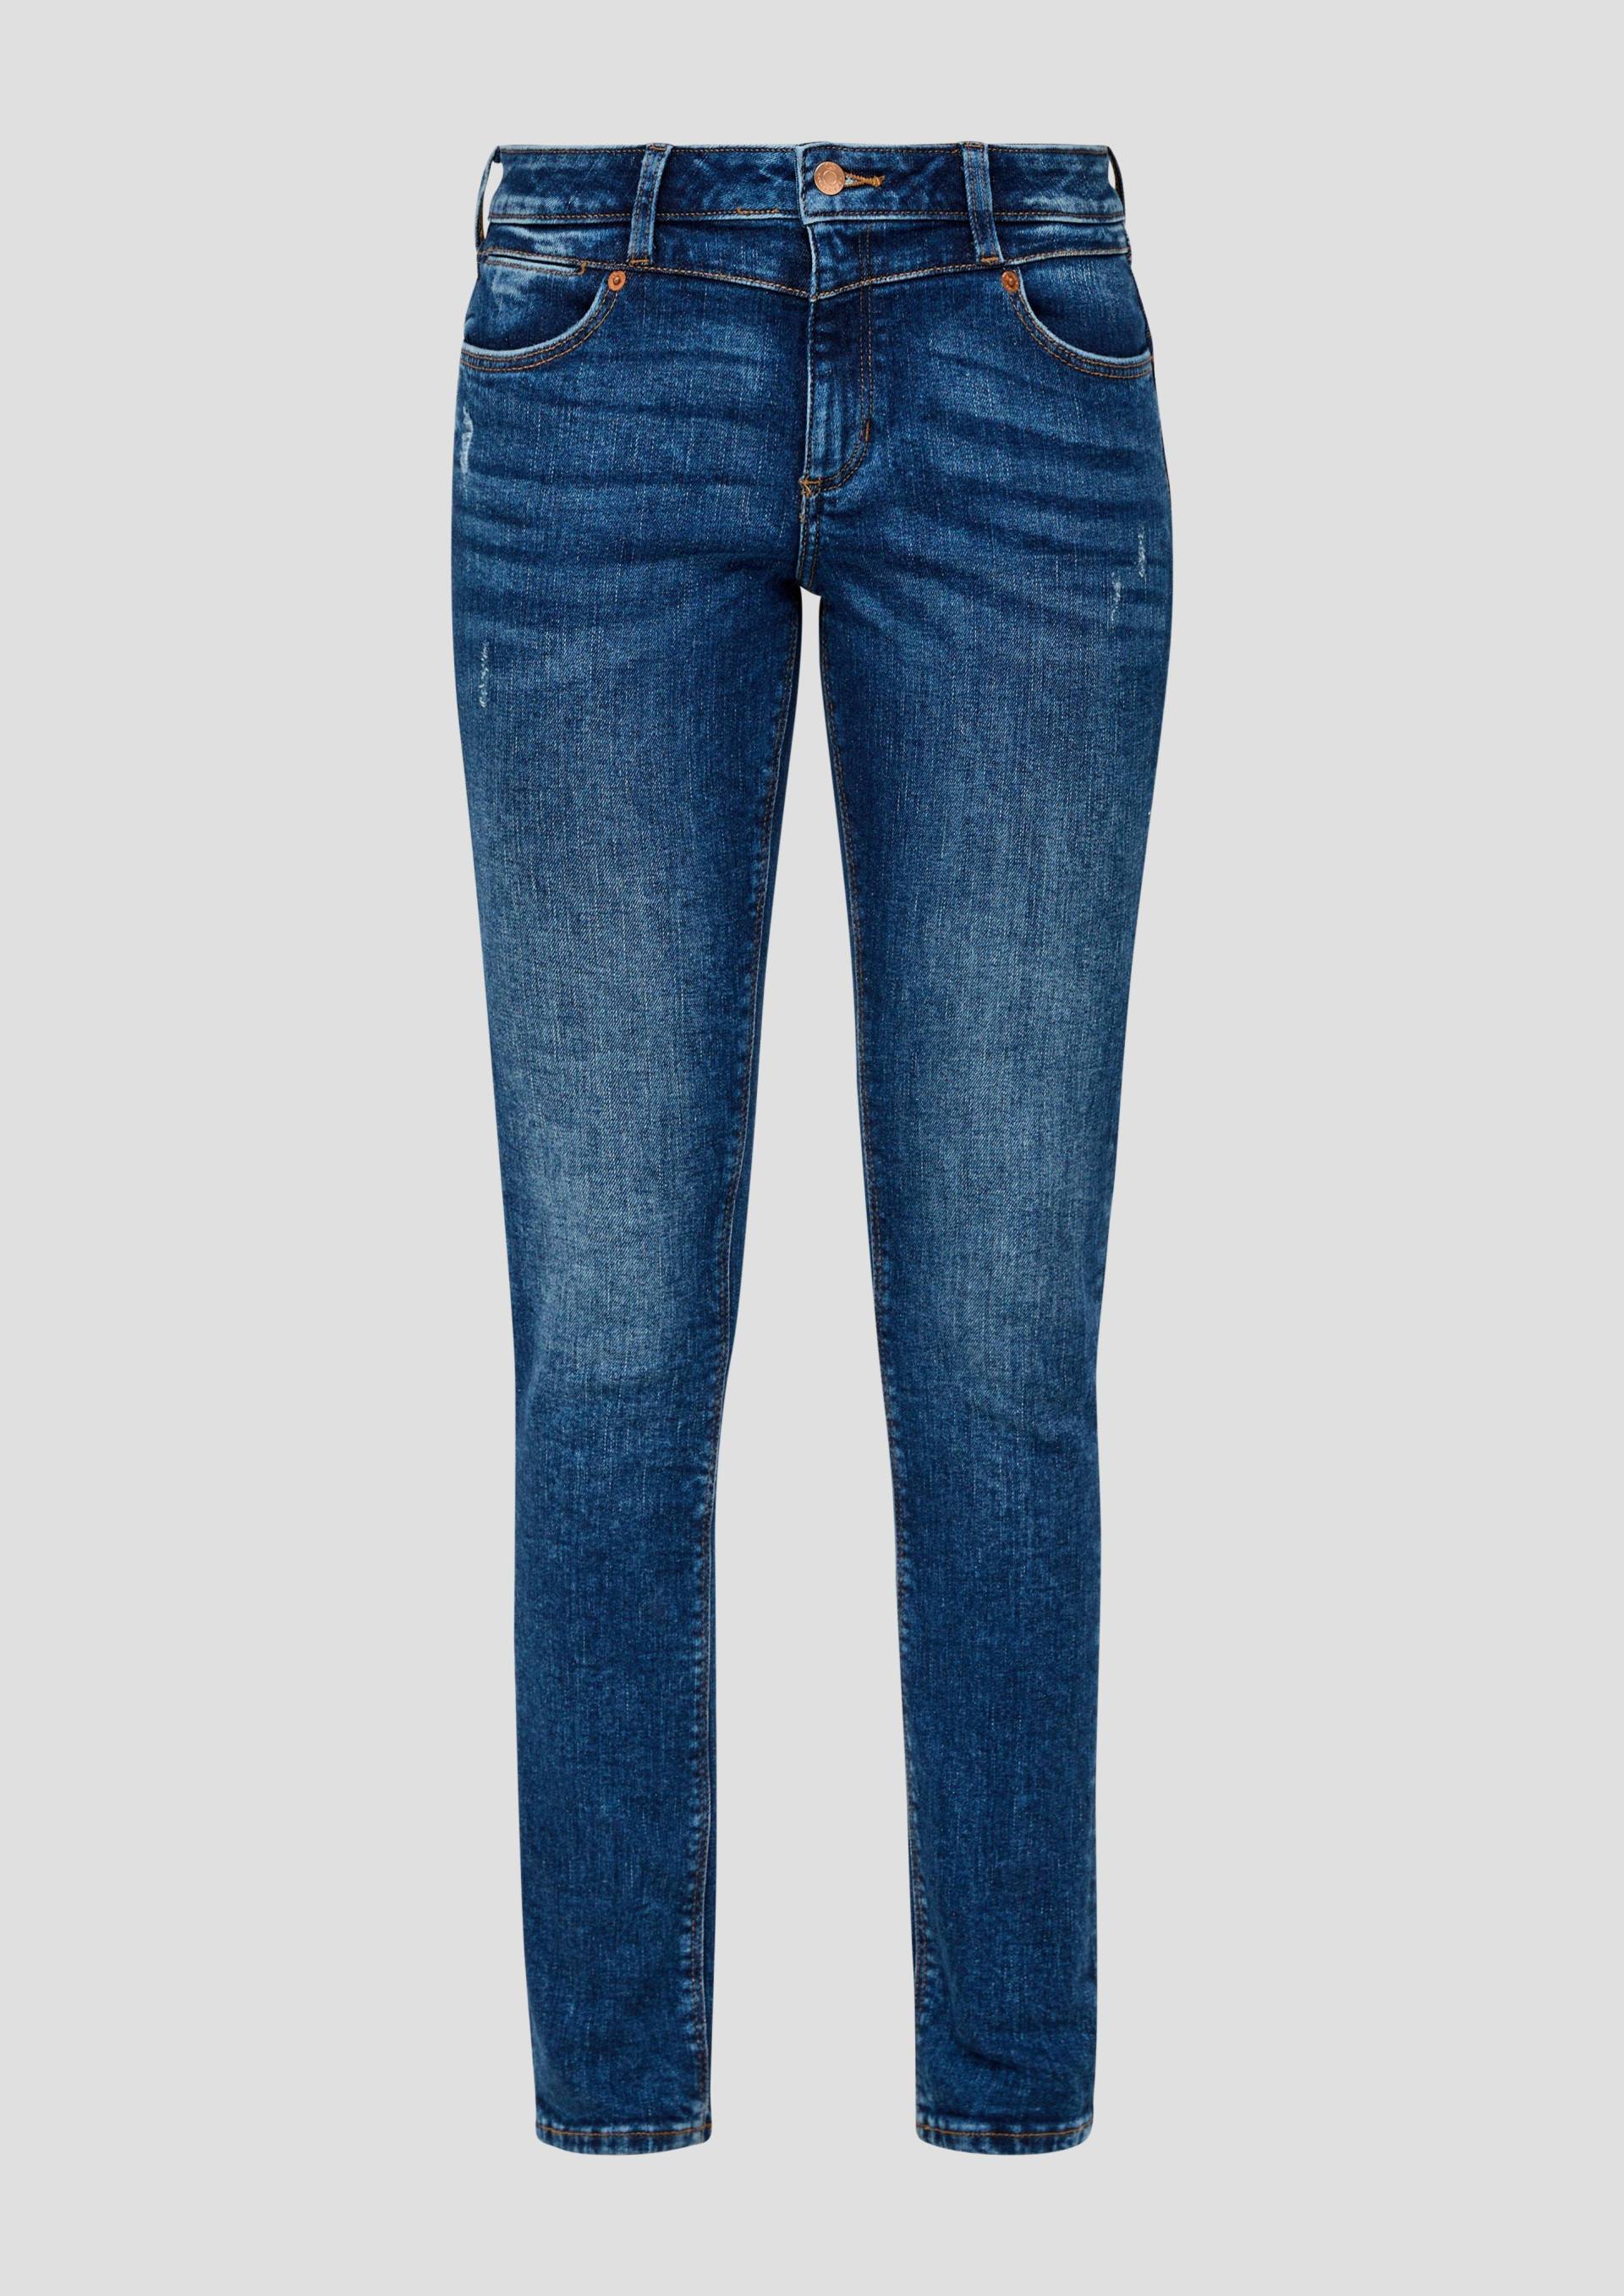 QS - Jeans / Slim Fit / Mid Rise / Slim Leg, Damen, blau von QS